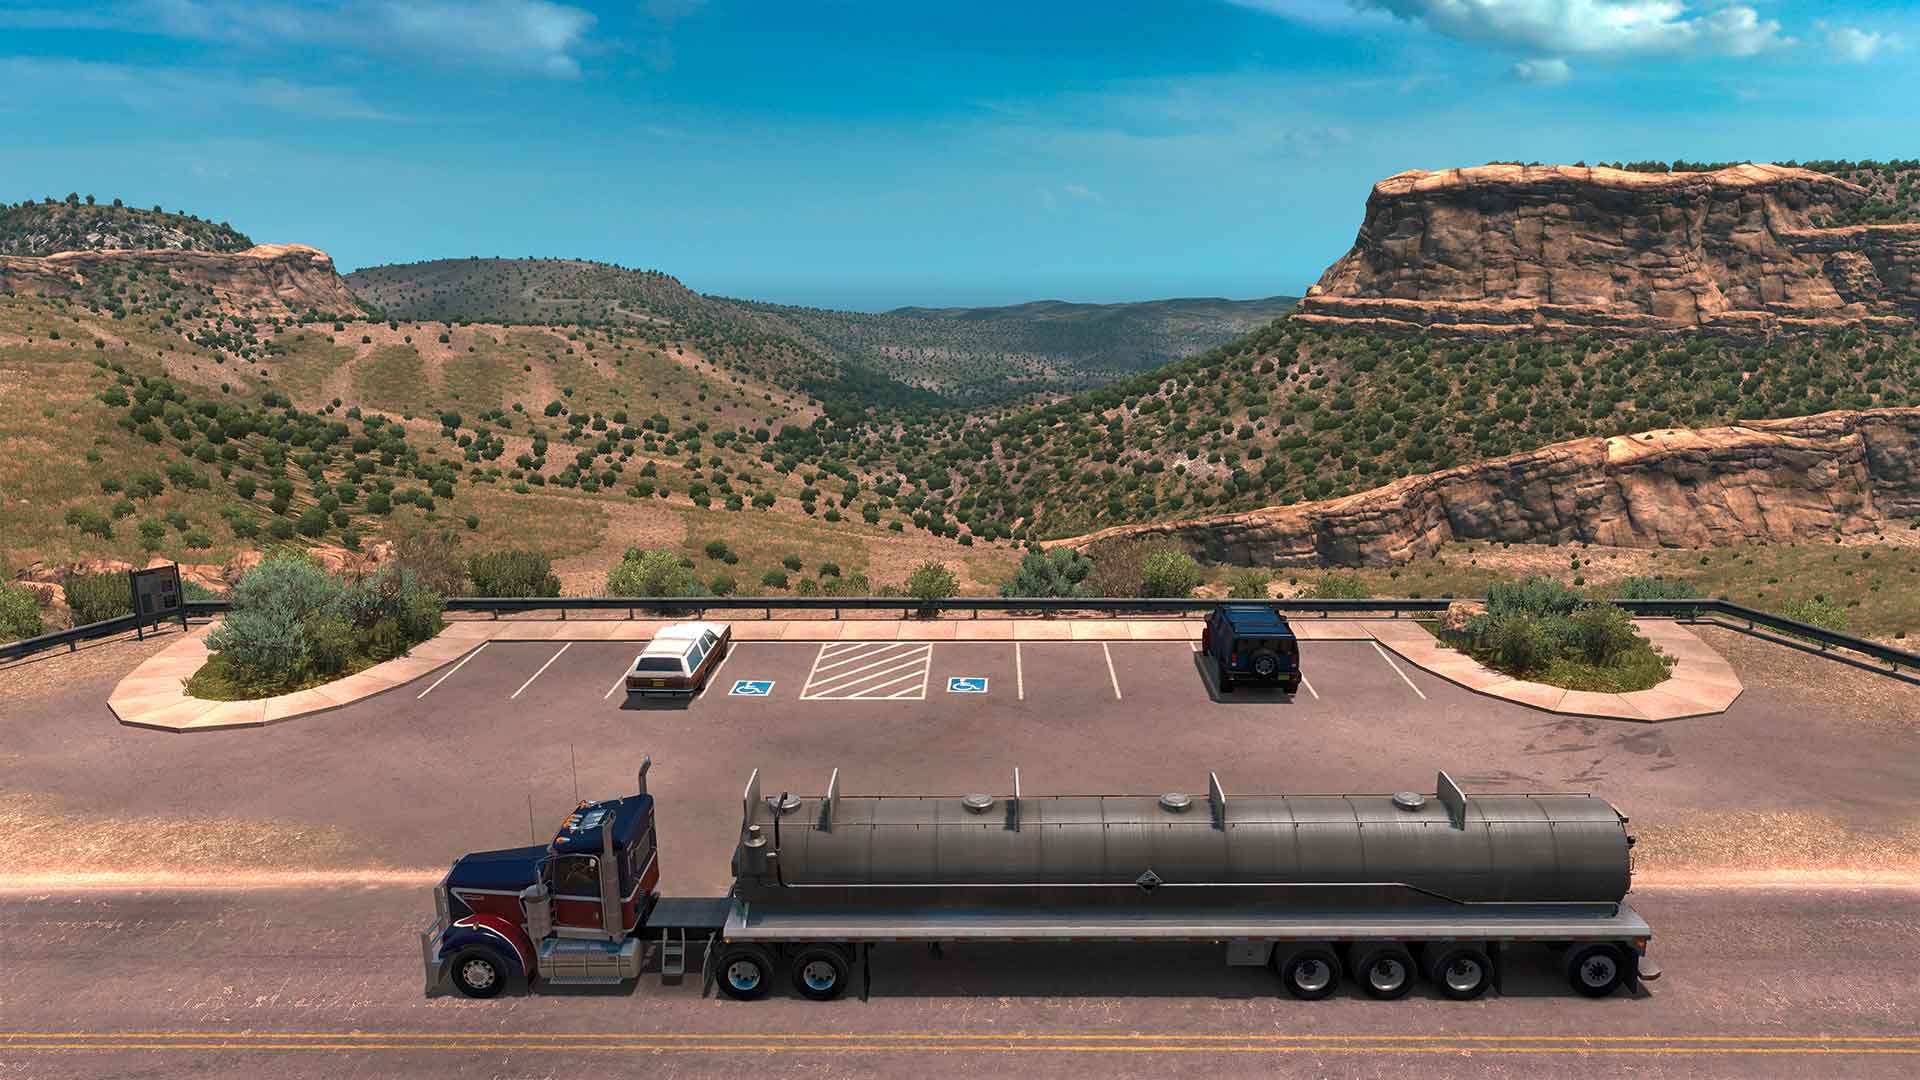 american truck simulator completo gratis